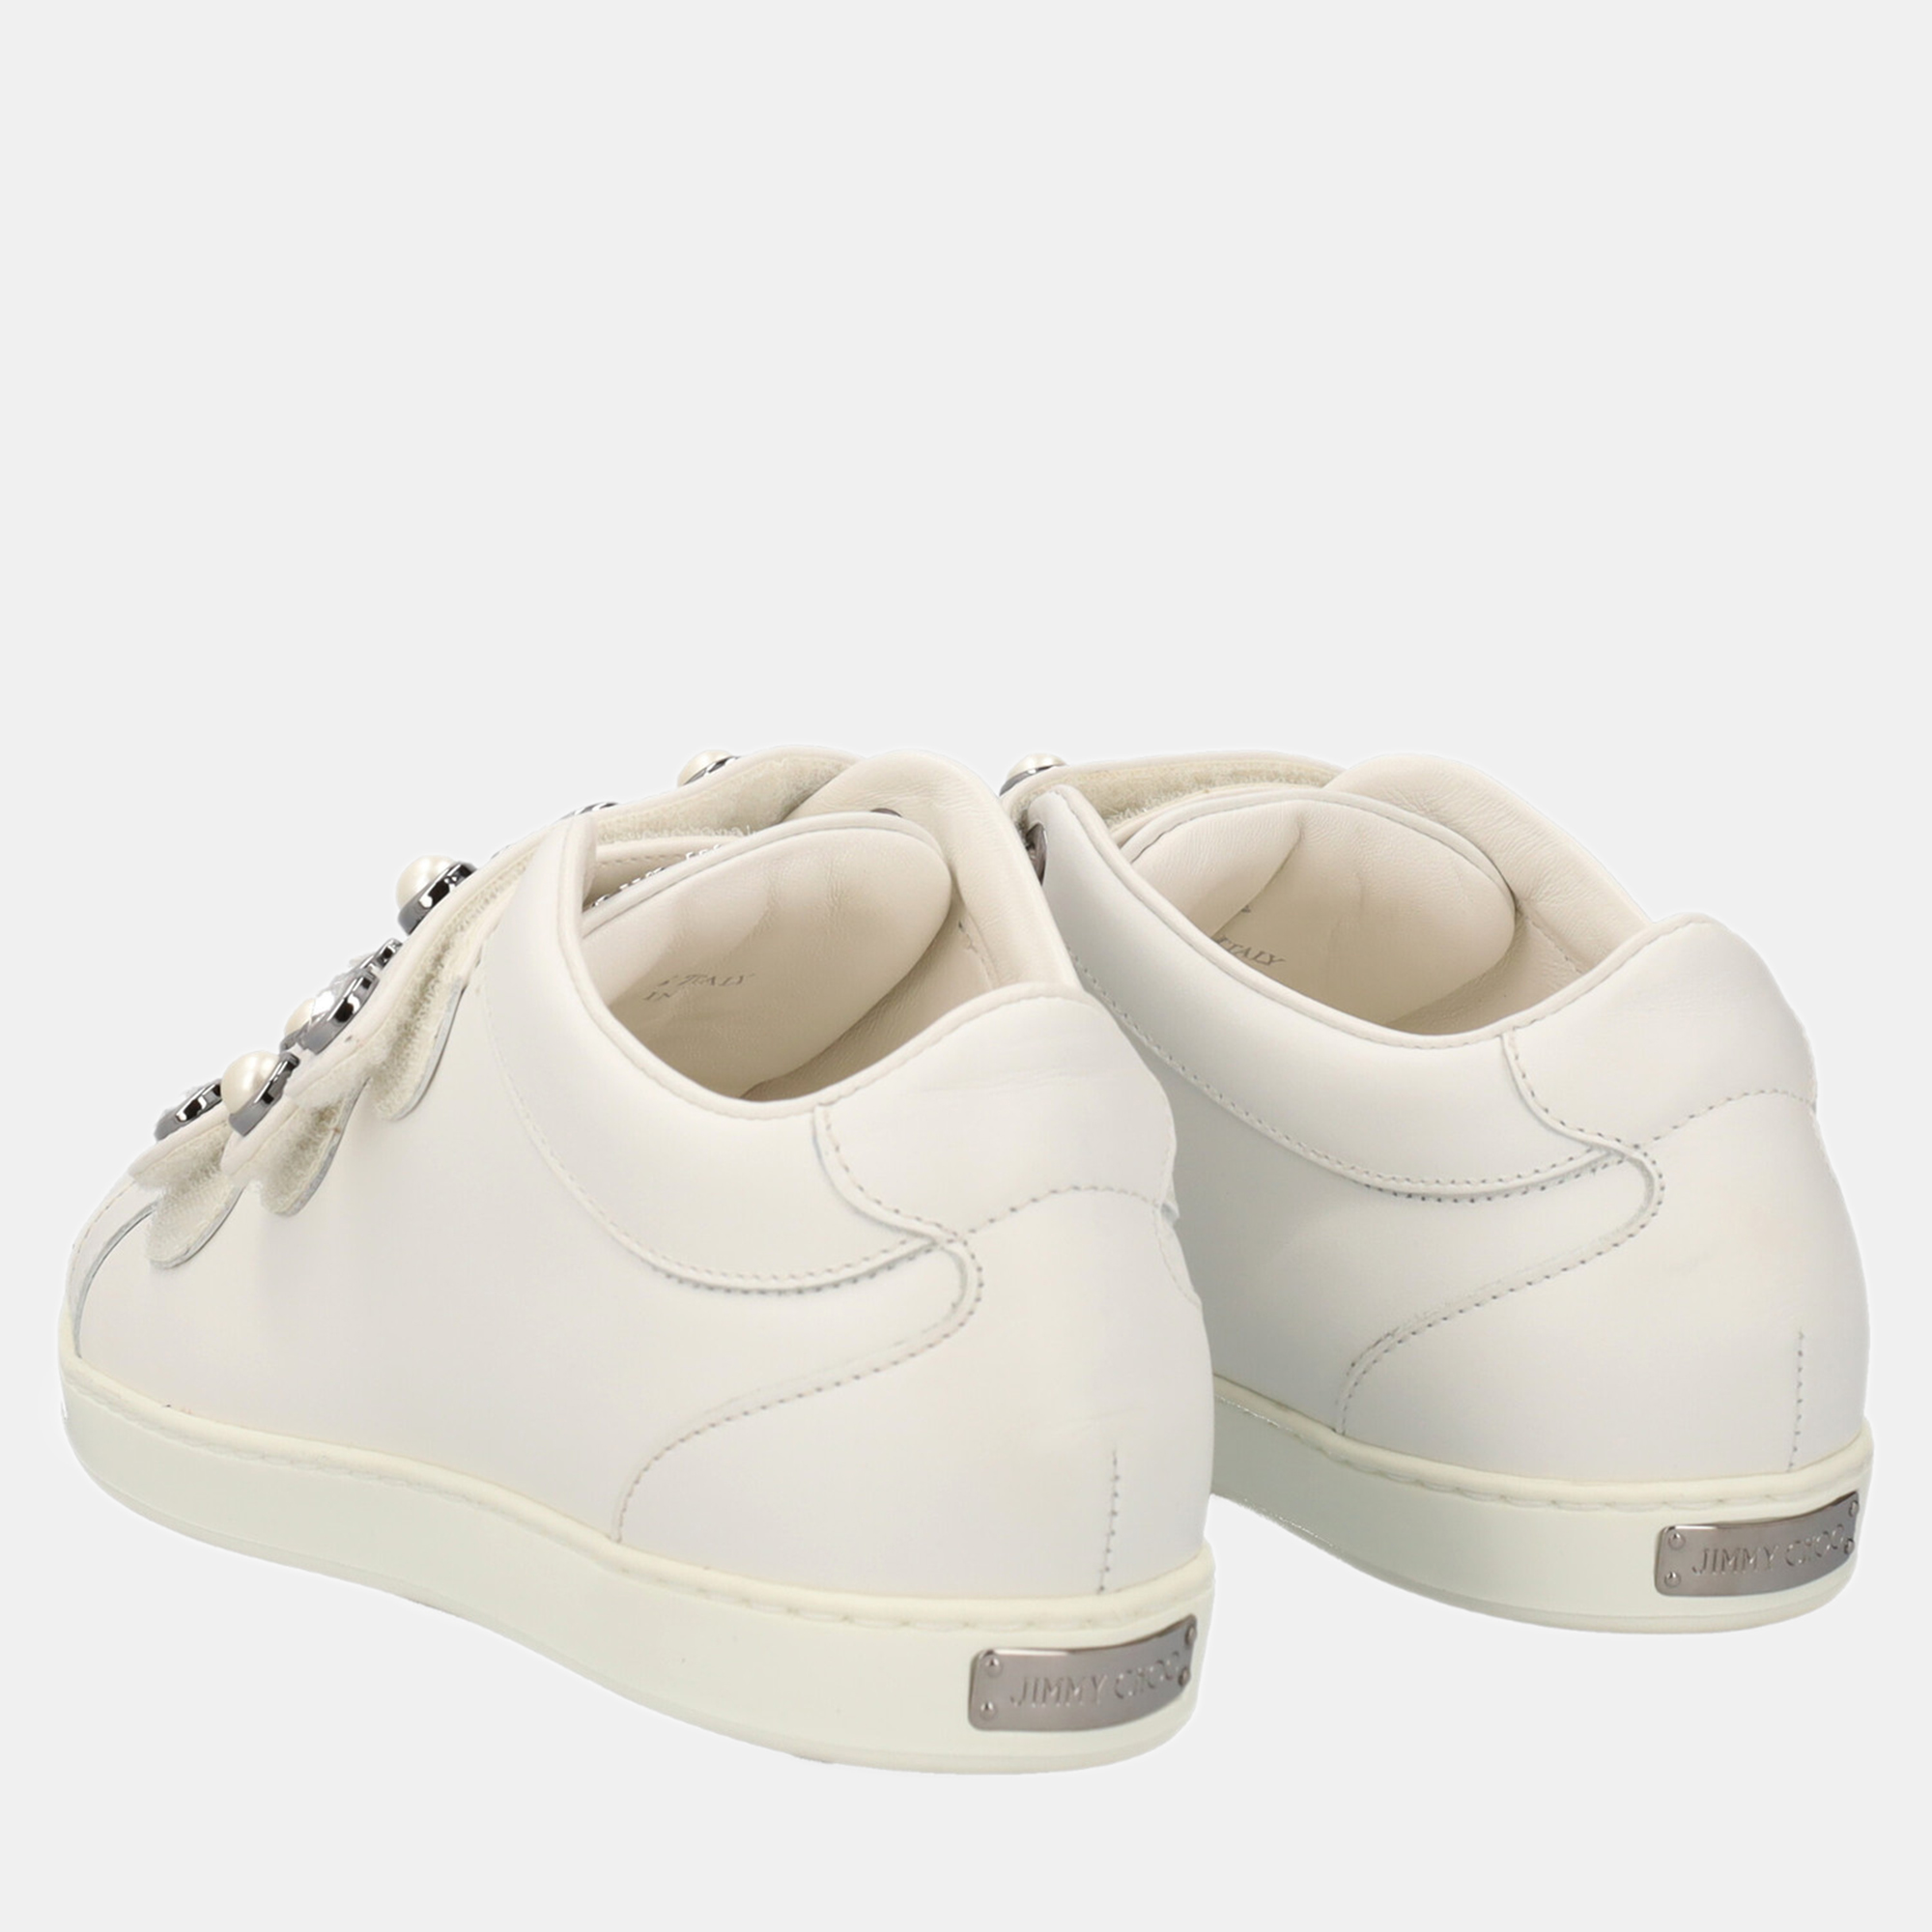 Jimmy Choo Women's Leather Sneakers - White - EU 37